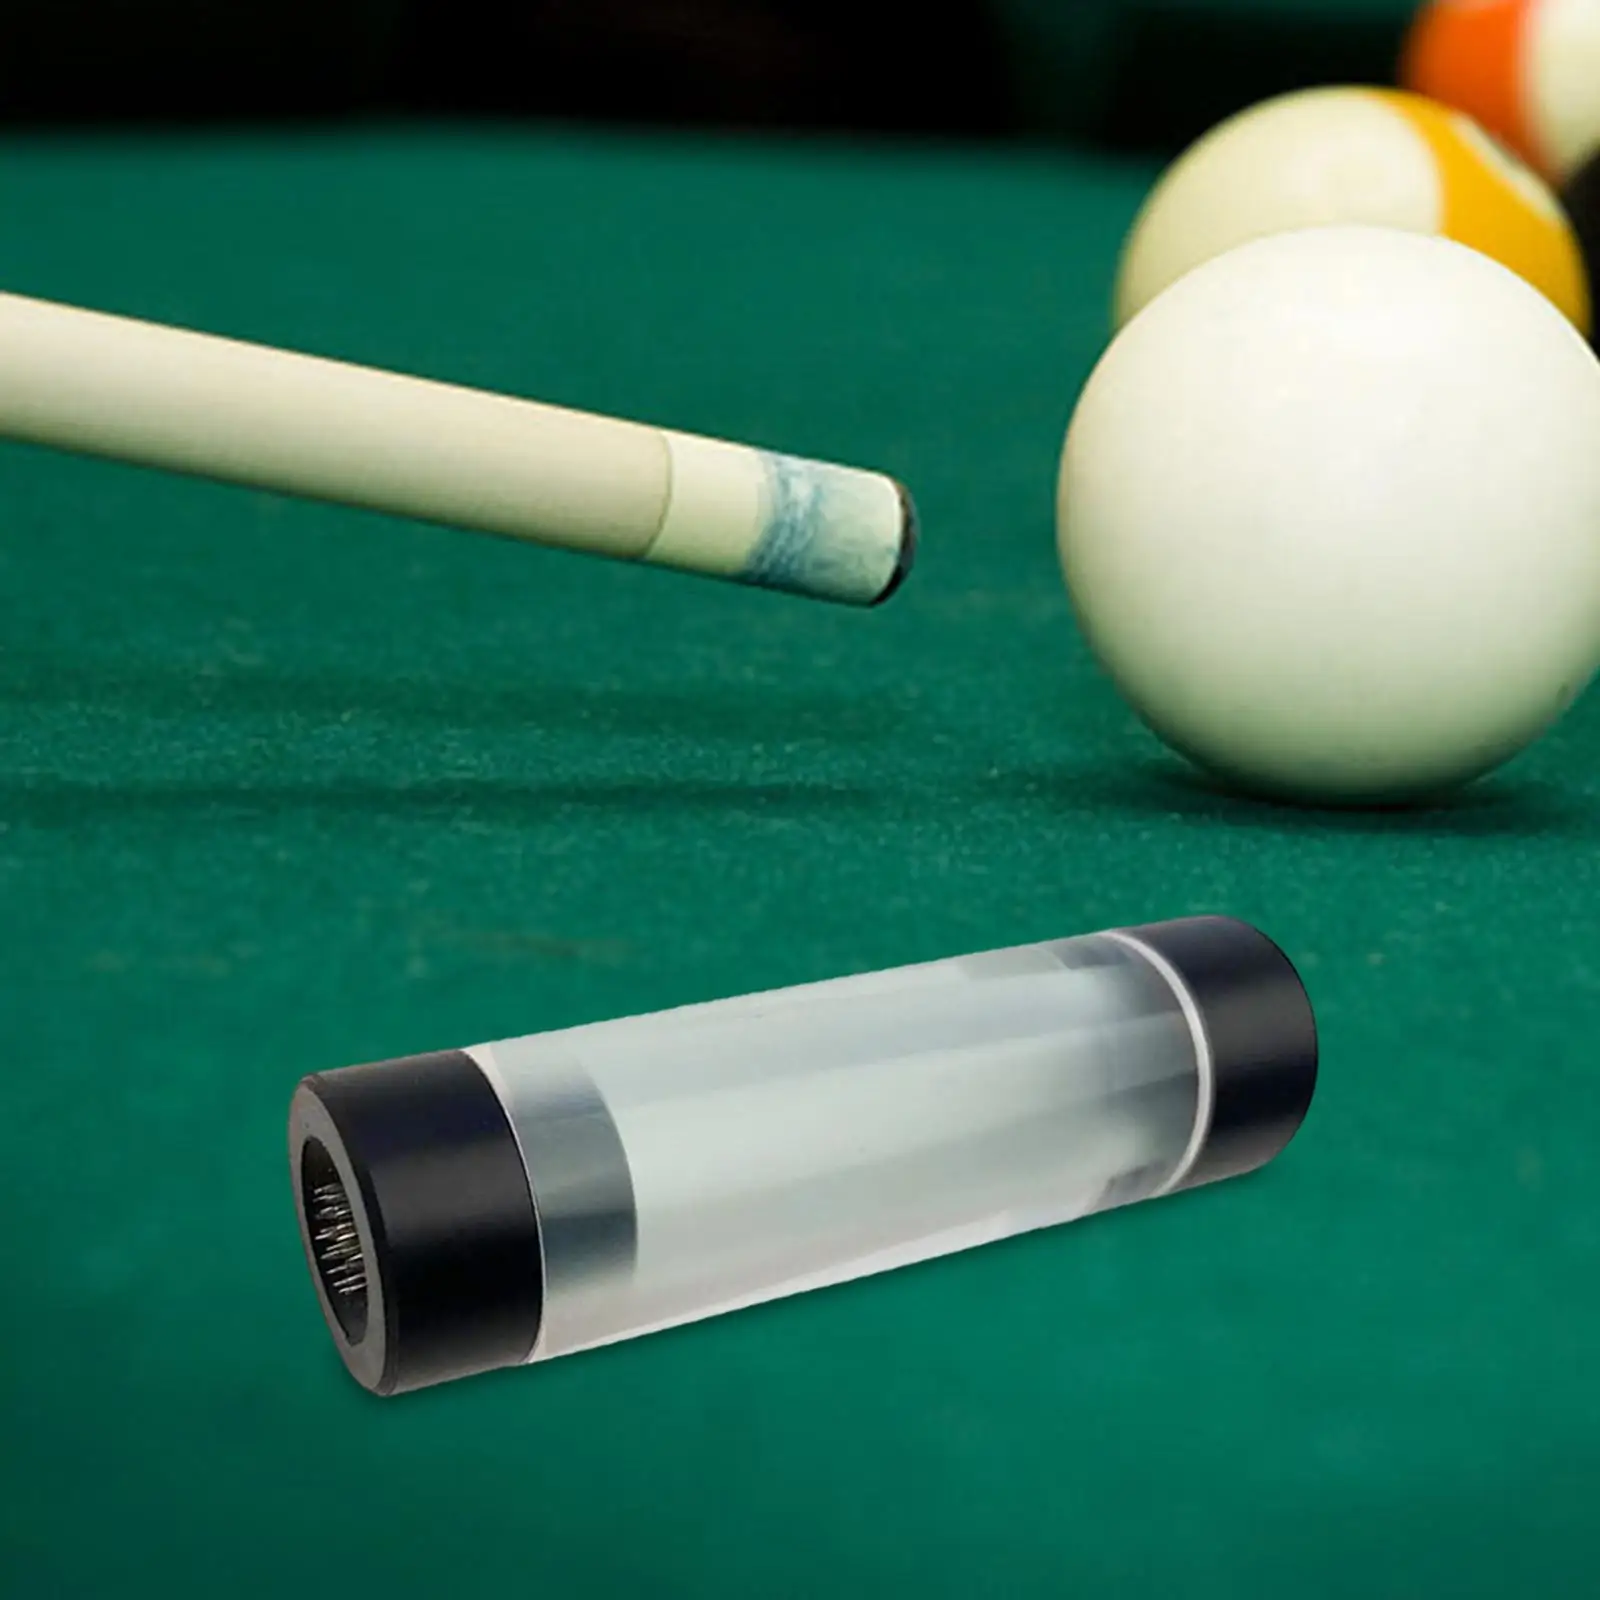 Billiard Pool Cue Tip Tool Premium Pricker Tapper Snooker Pool Cue Tip Shaper Billiards Accessories Pool Cue Maintenance Tool